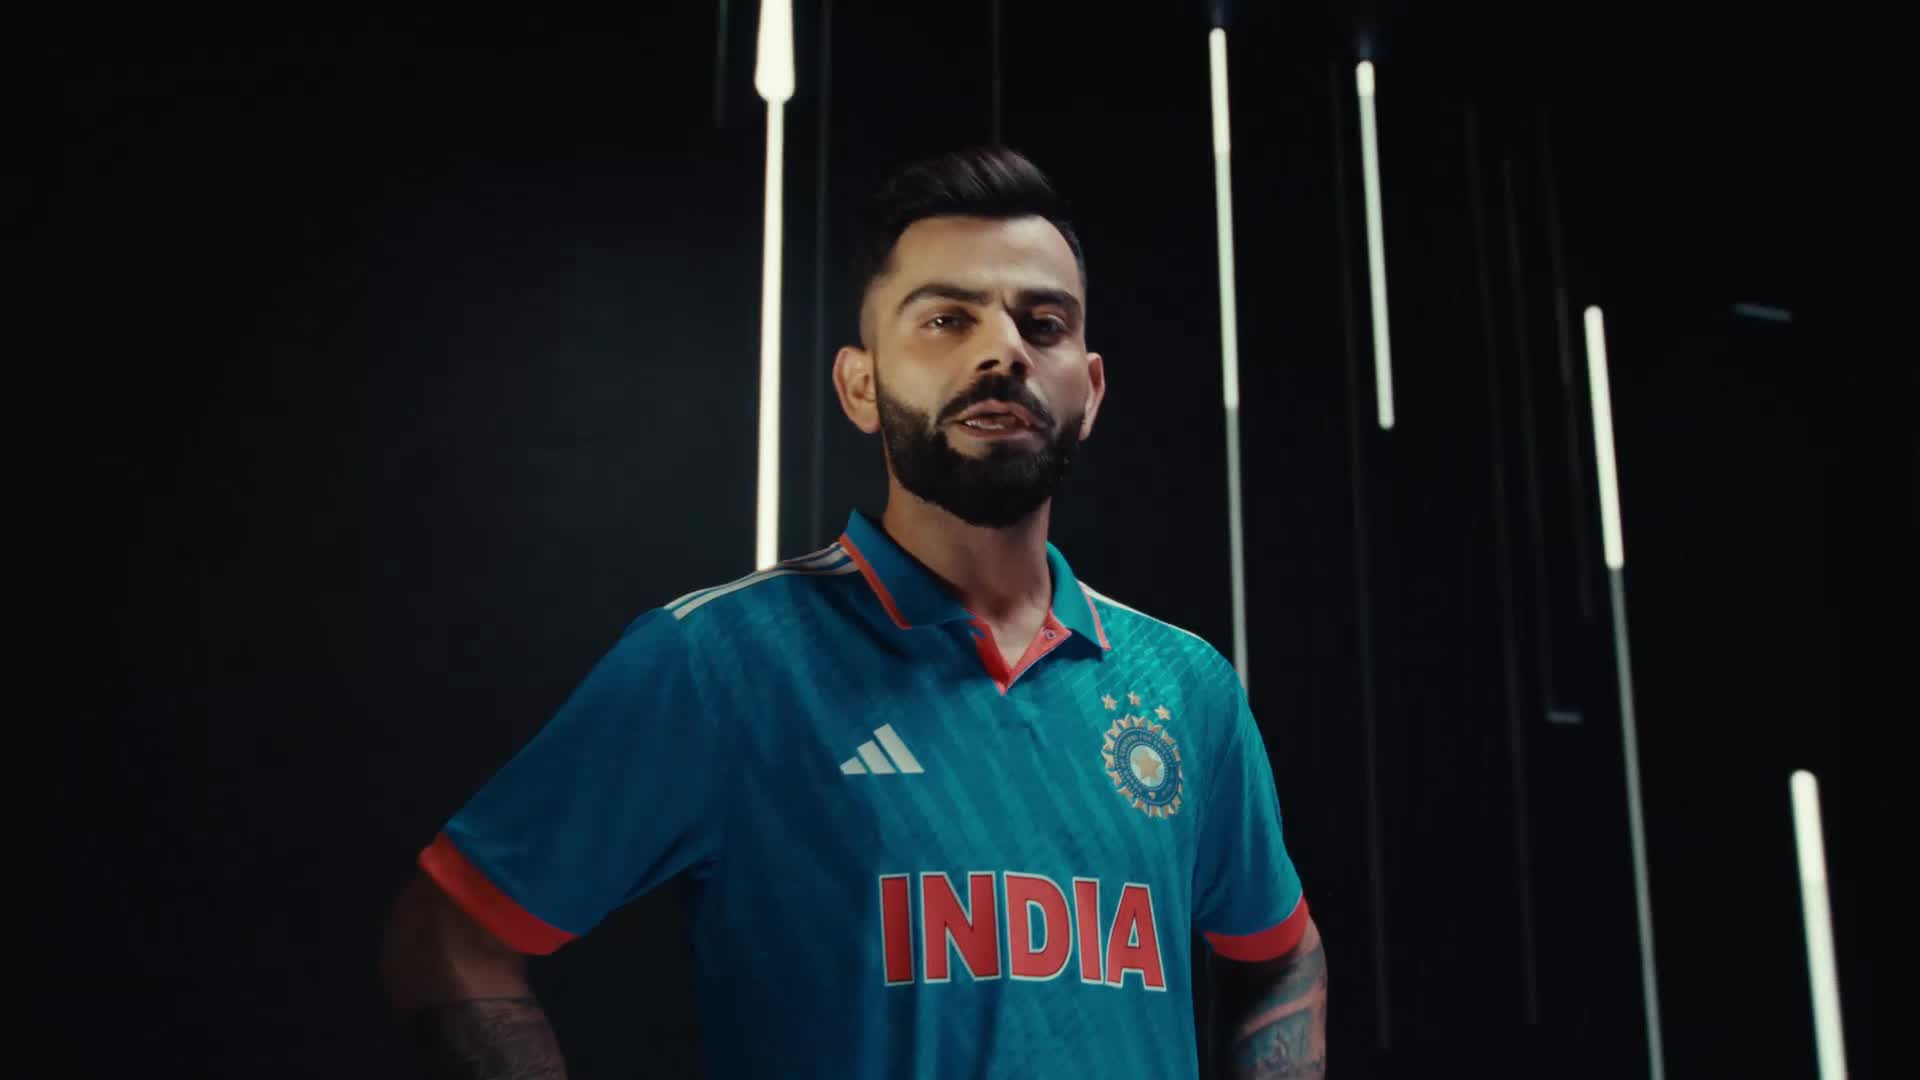 Absoluut Skim Redelijk Official India Cricket Team kit | adidas India